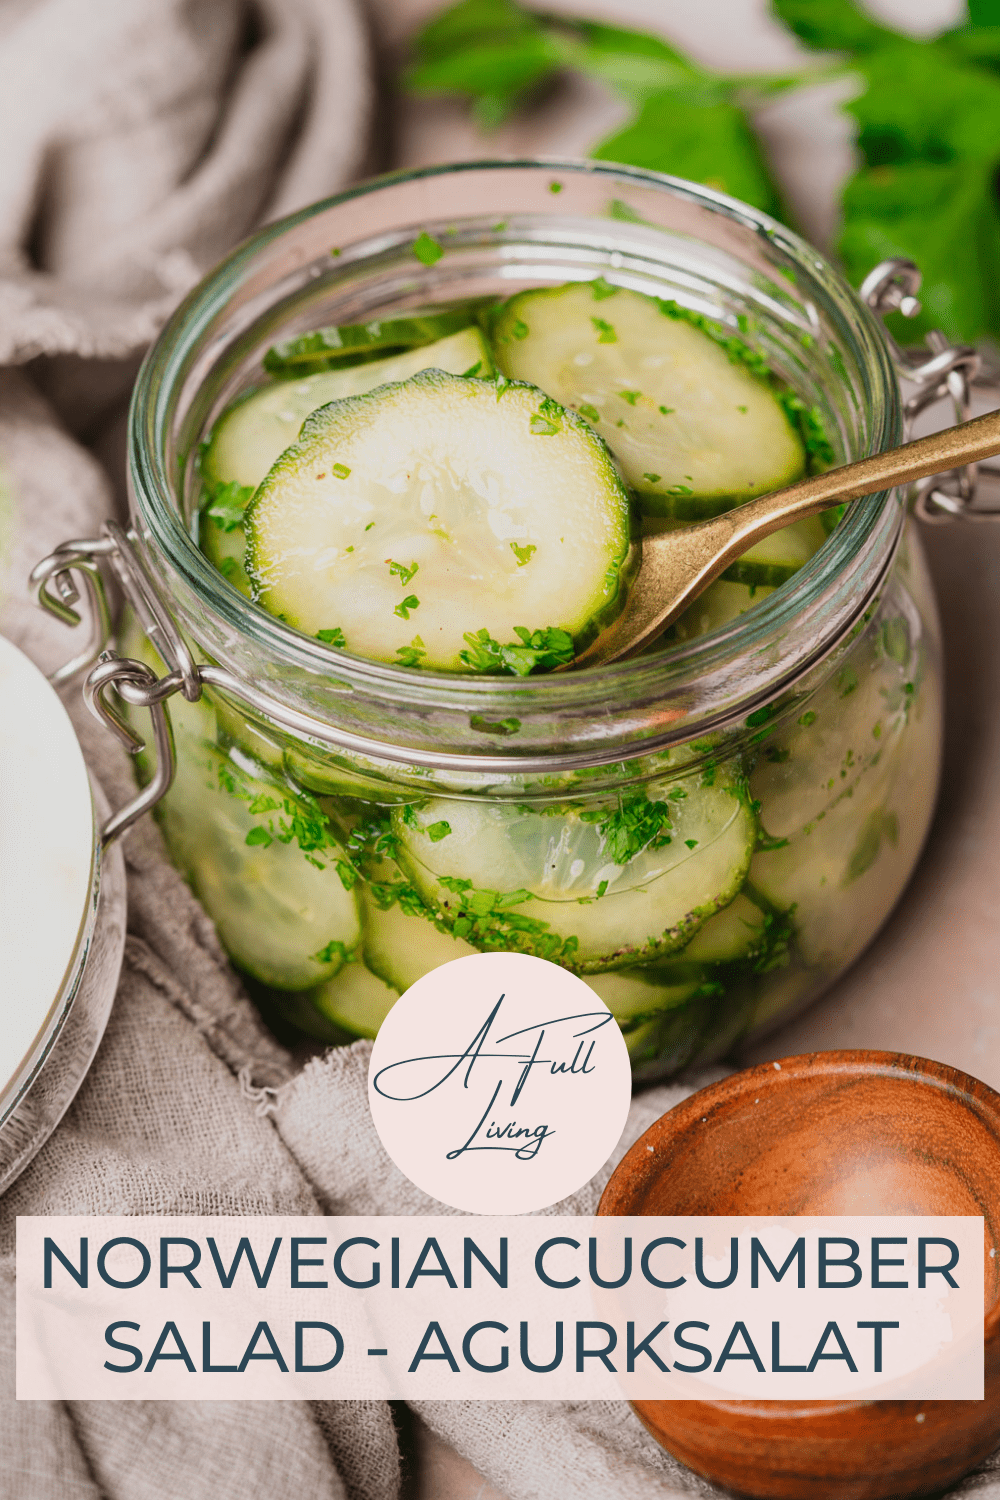 agurksalat - norwegian cucumber salad.